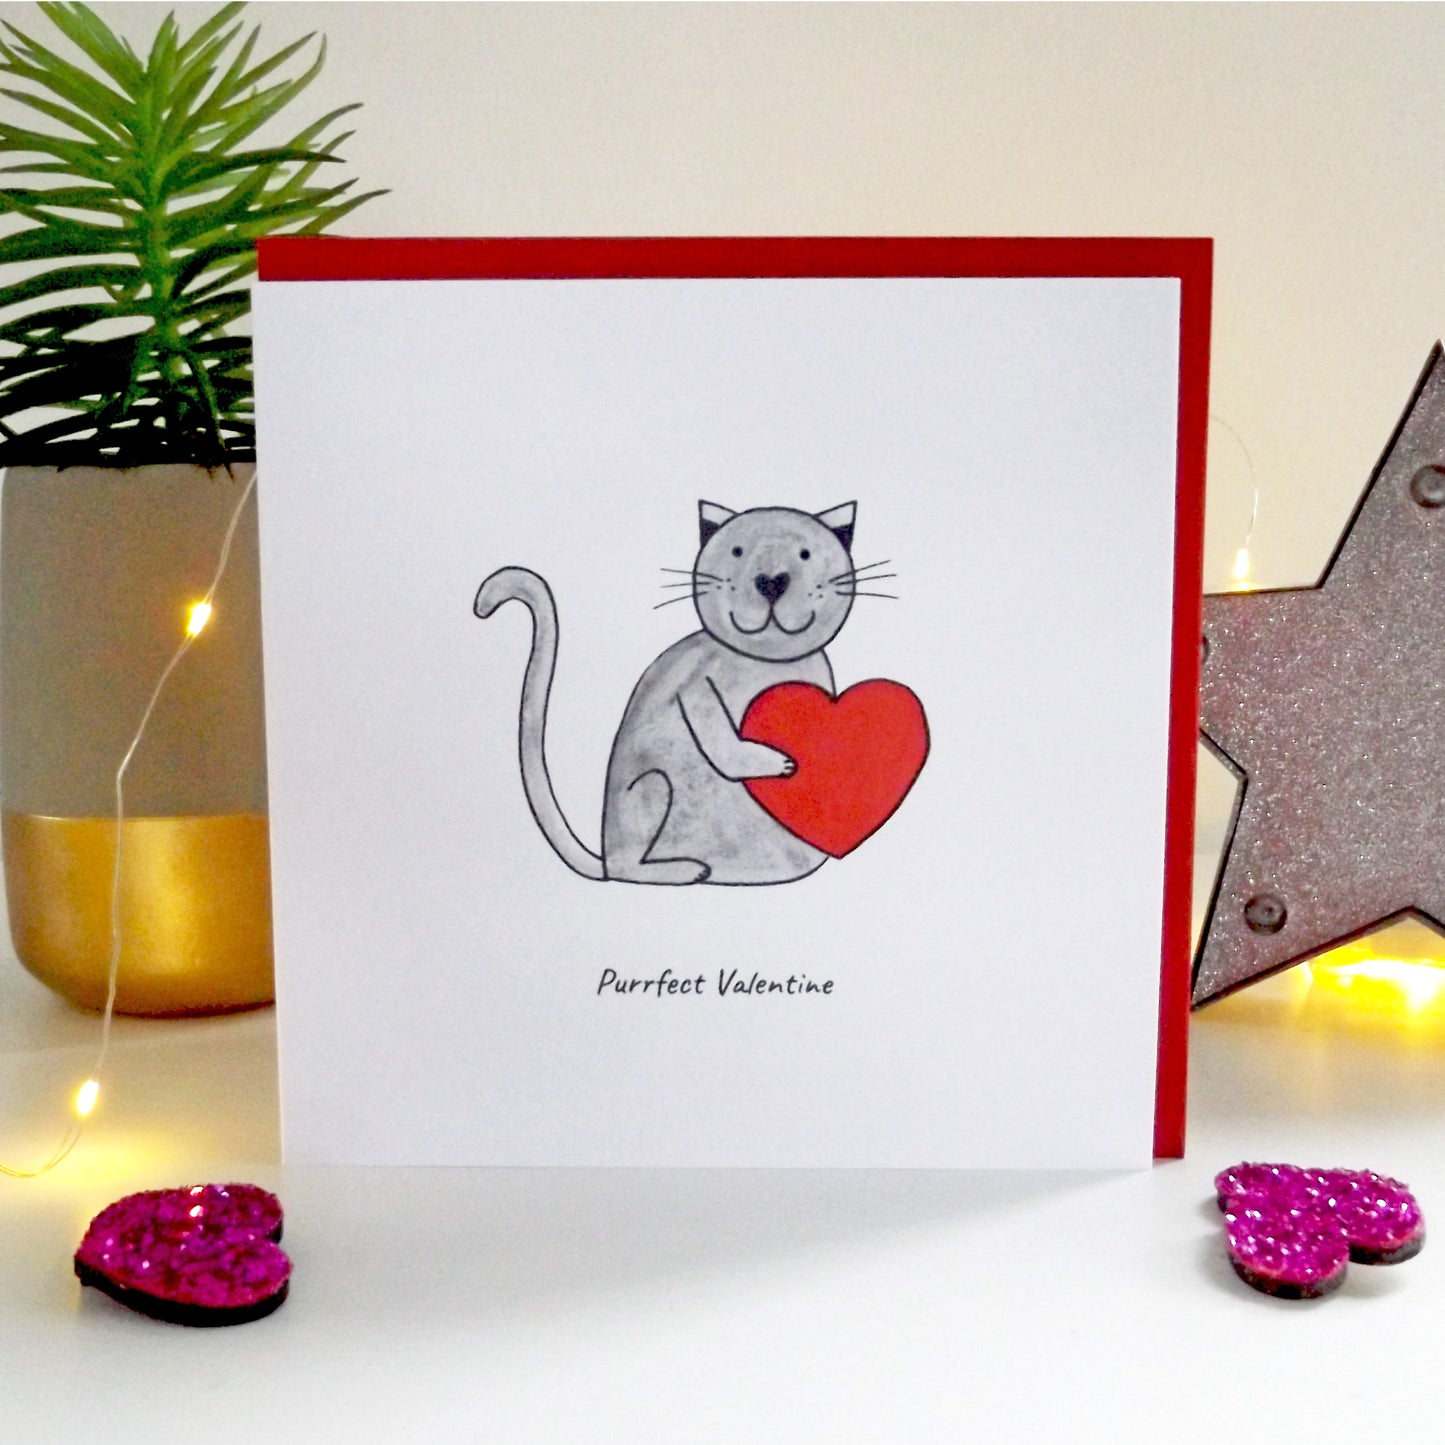 Purrfect Valentine - funny cat valentine's card